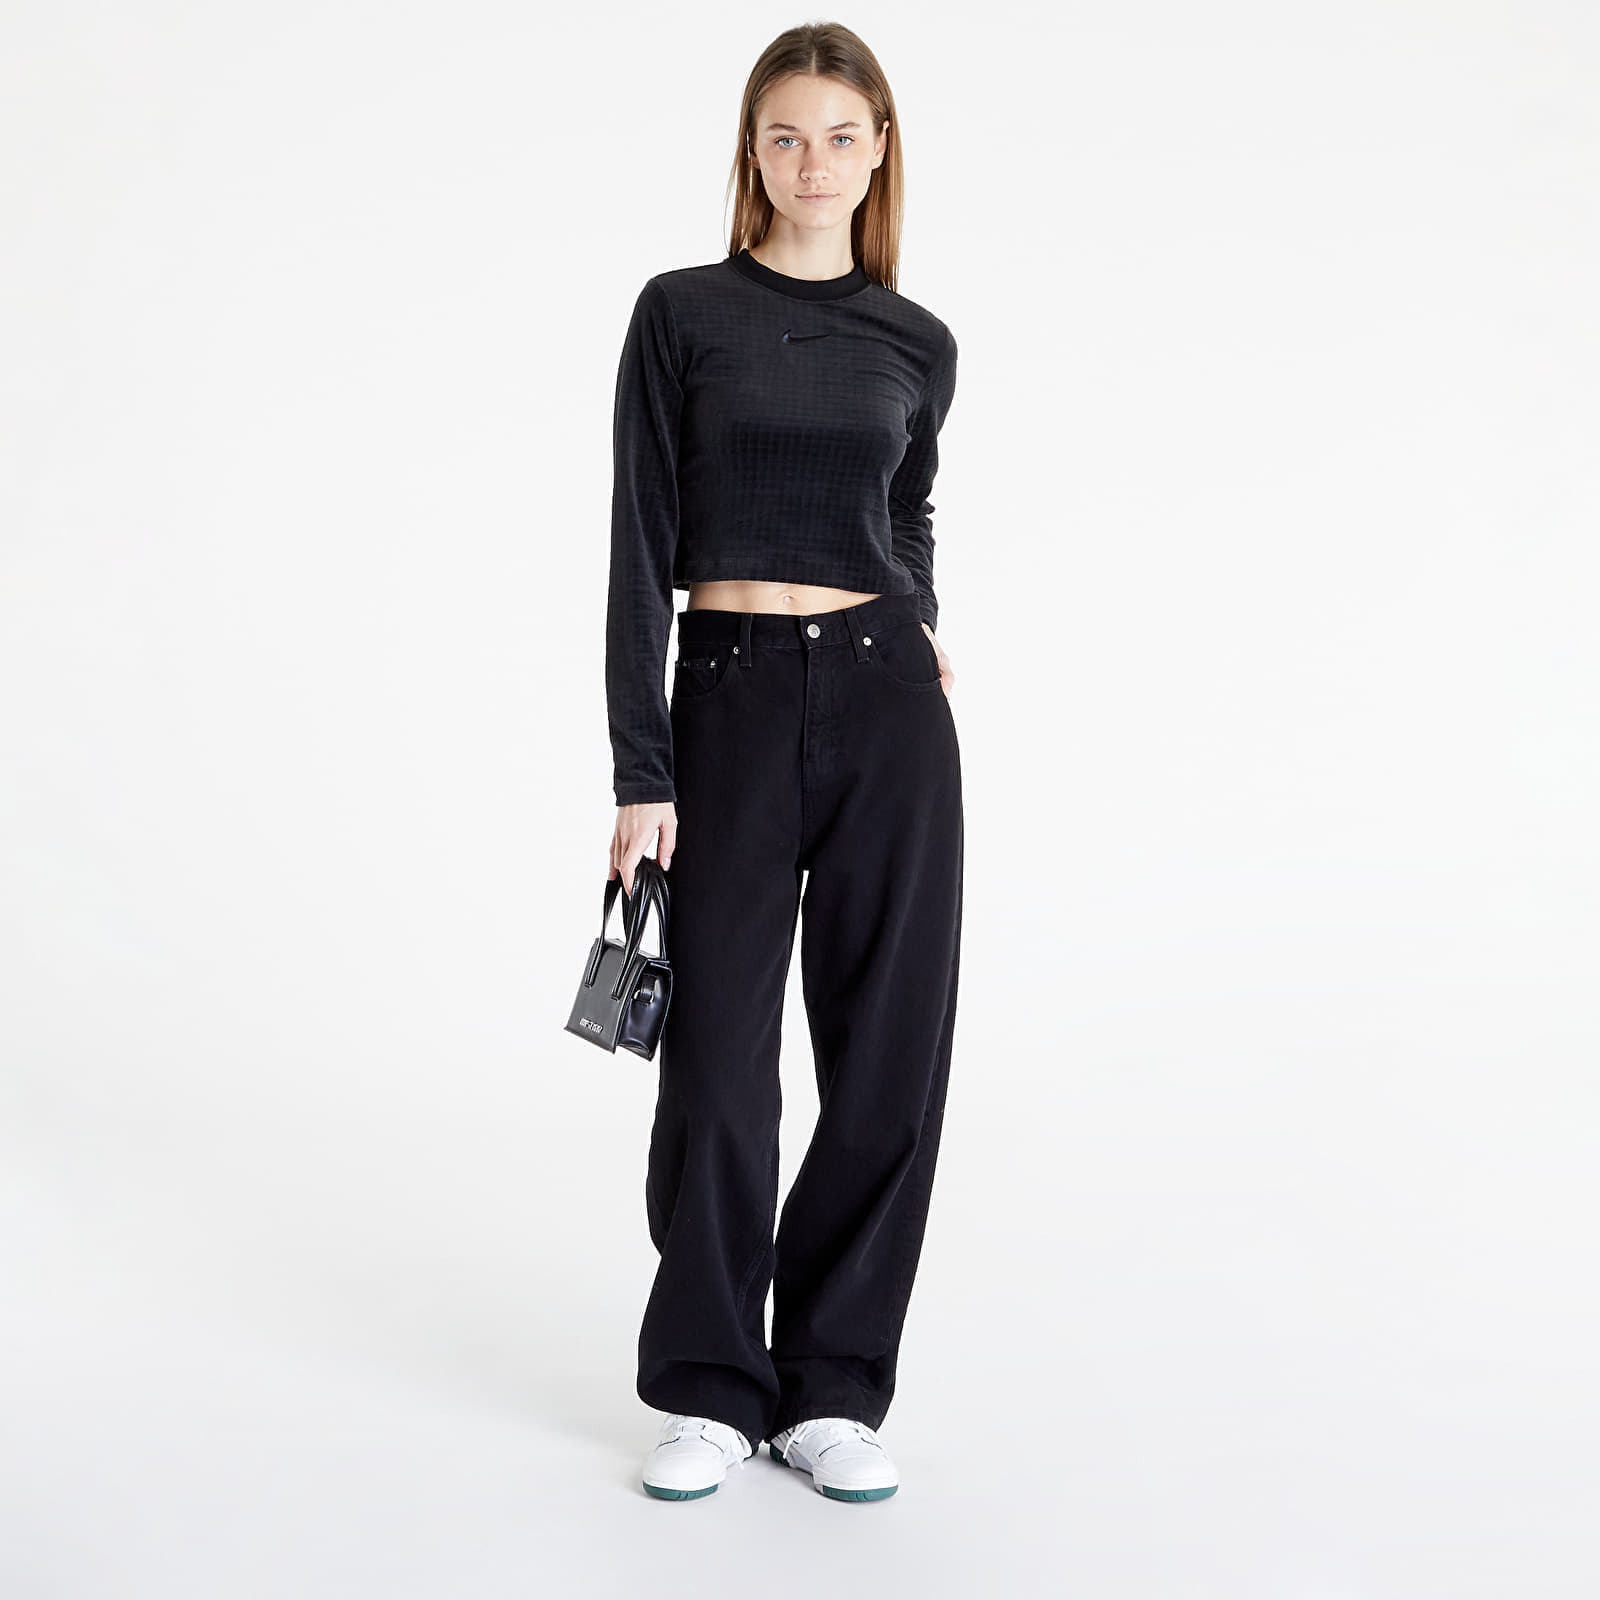 Trička Nike Sportswear Women's Velour Long-Sleeve Top Black/ Anthracite